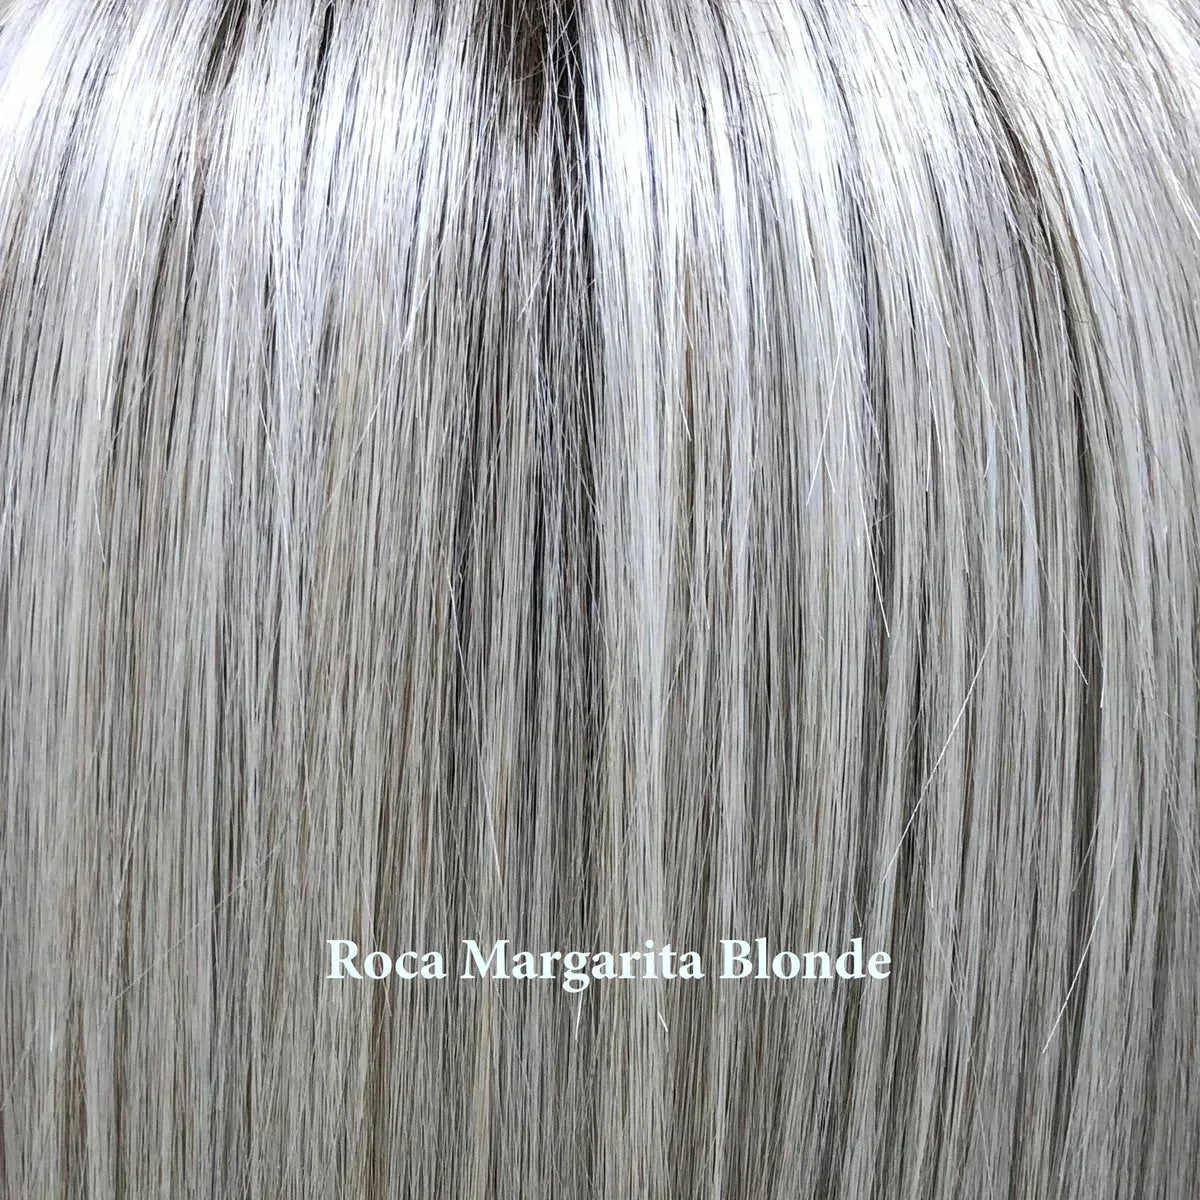 ! Balance - Coconut Silver blonde